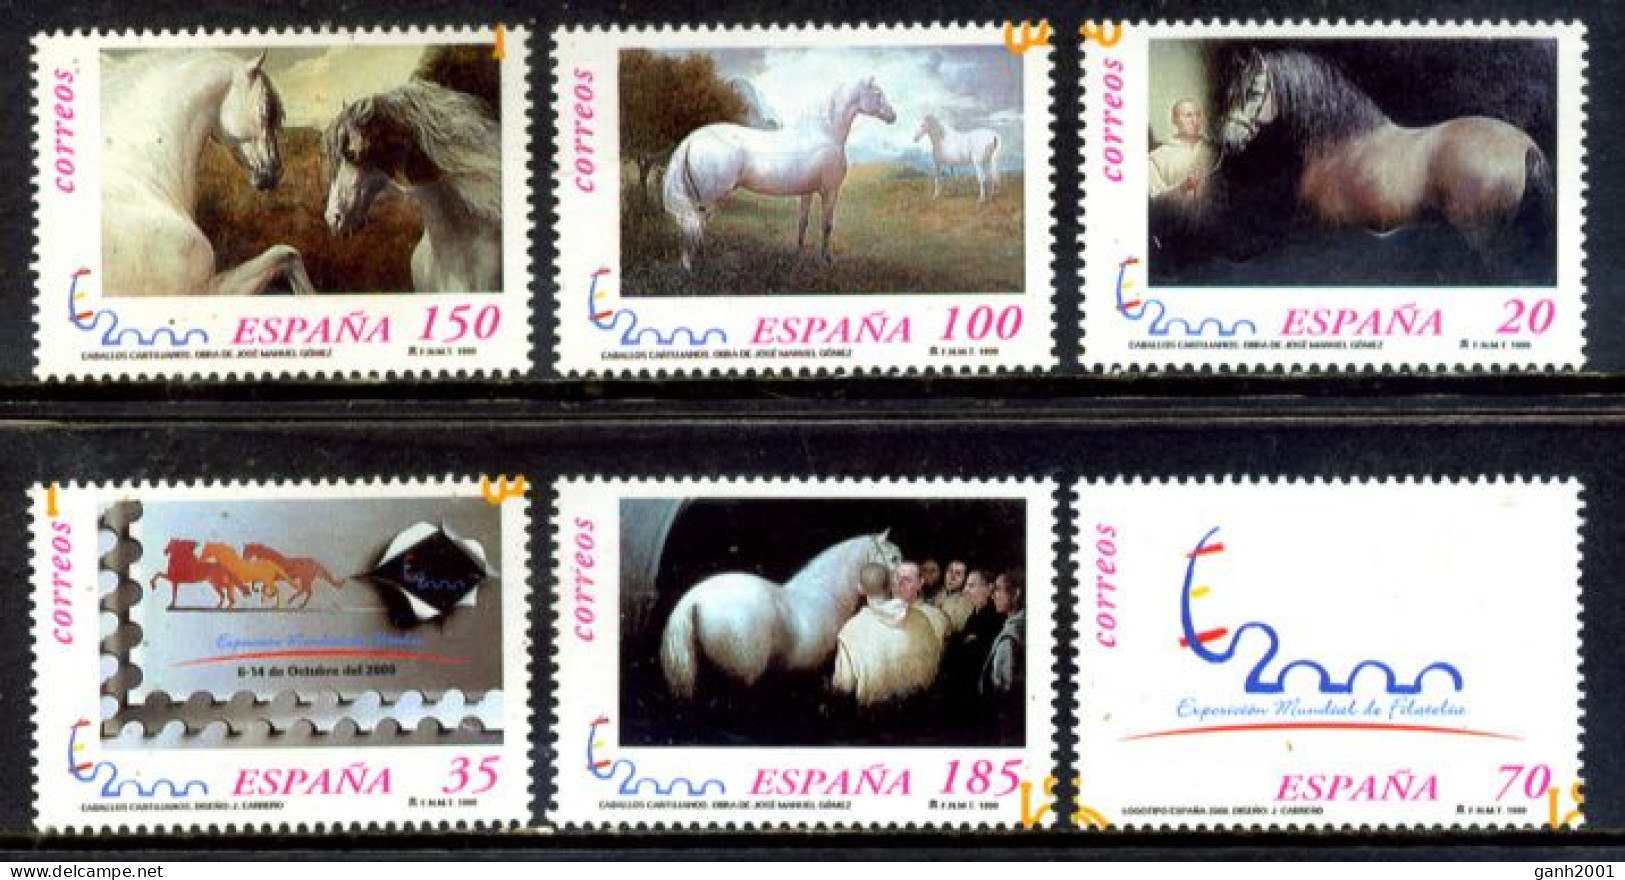 Spain 1999 España / Mammals Horses MNH Caballos Säugetiere Chevaux / Hb19  34-6 - Cavalli